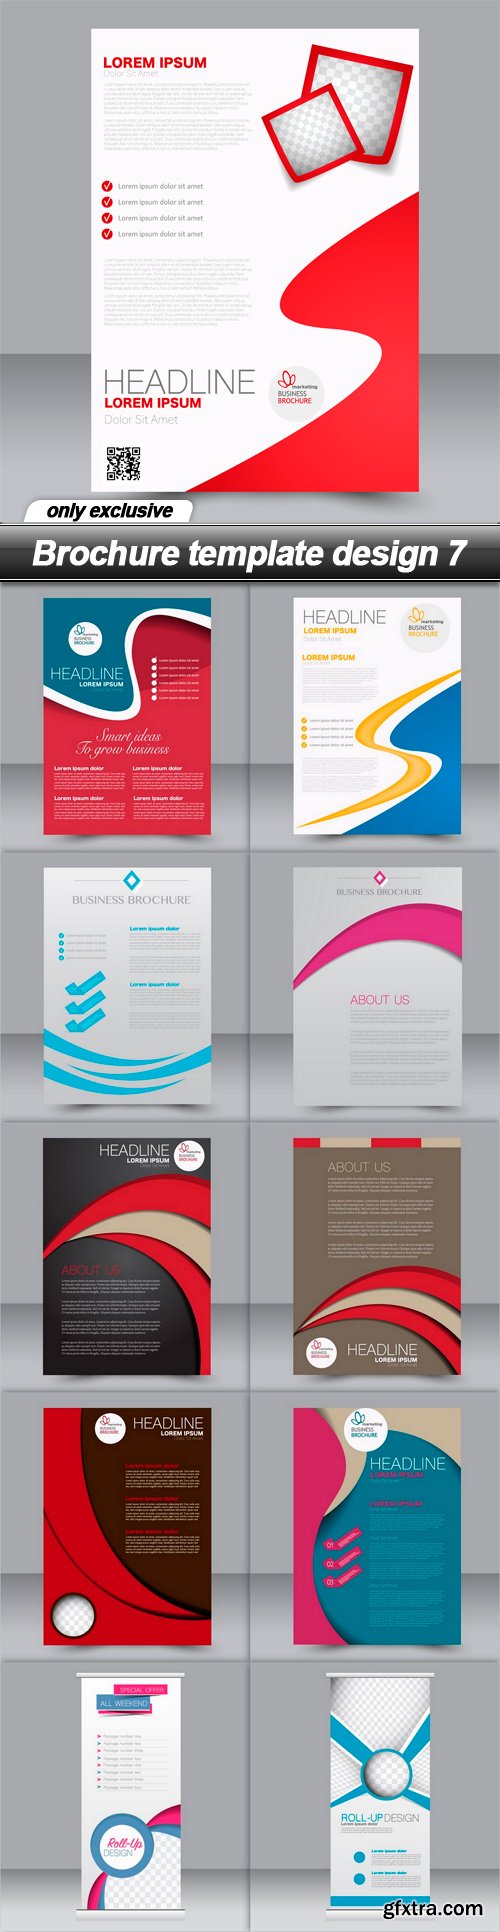 Brochure template design 7 - 11 EPS